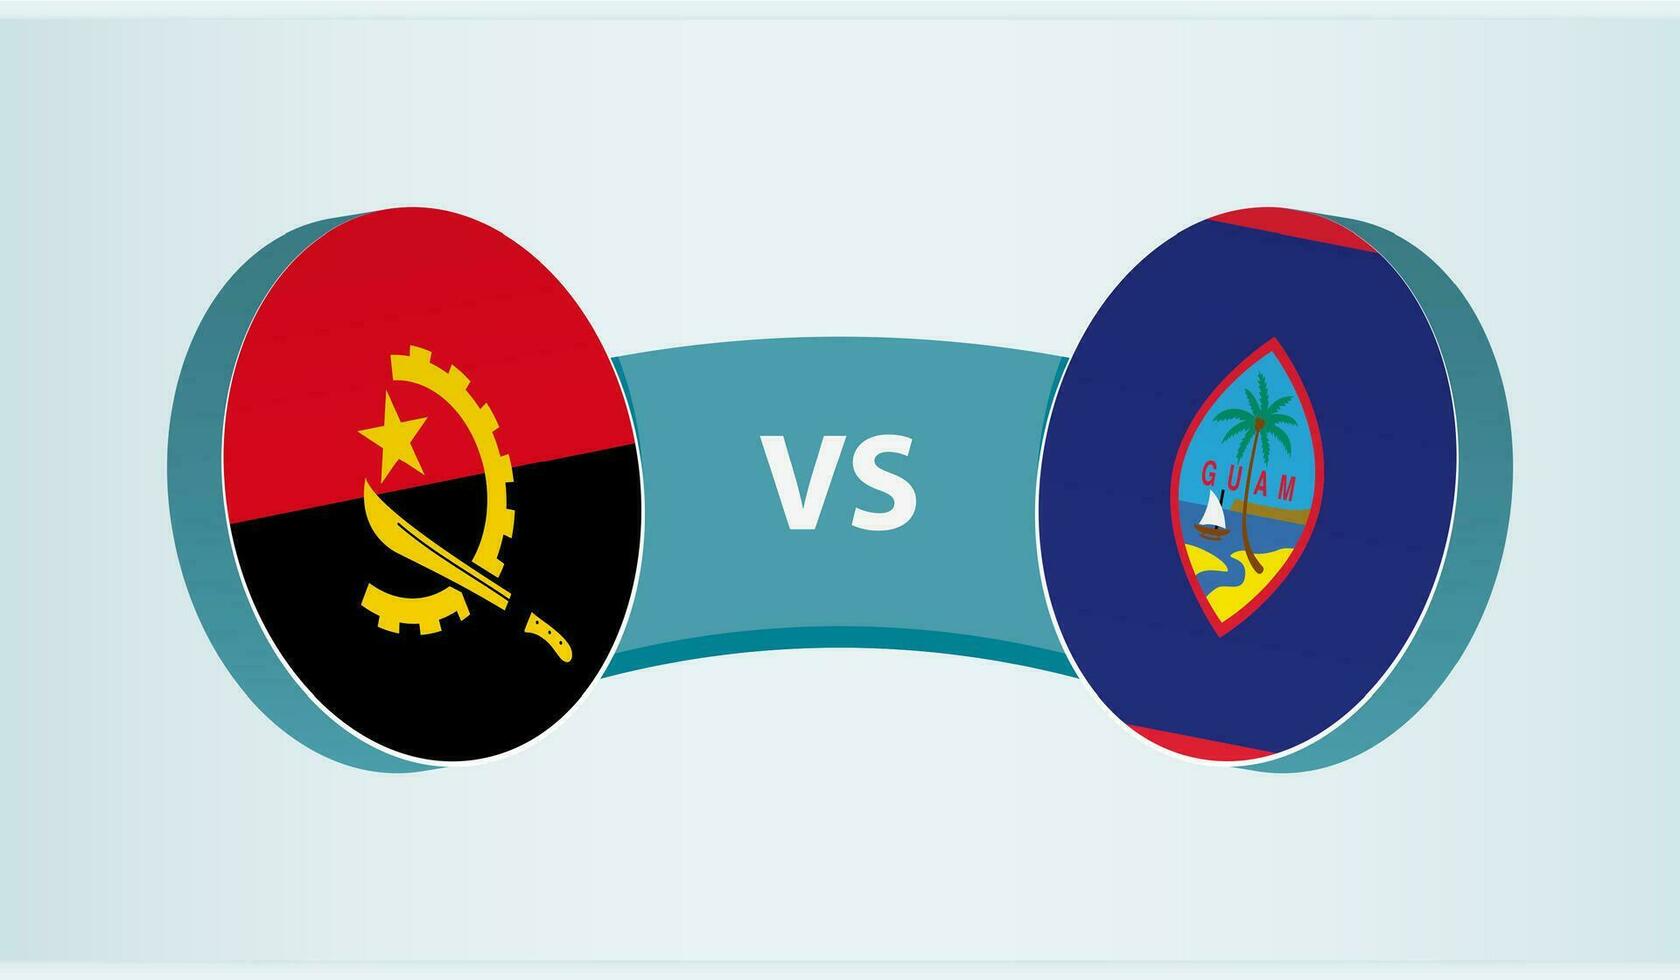 Angola versus Guam, team sports competition concept. vector